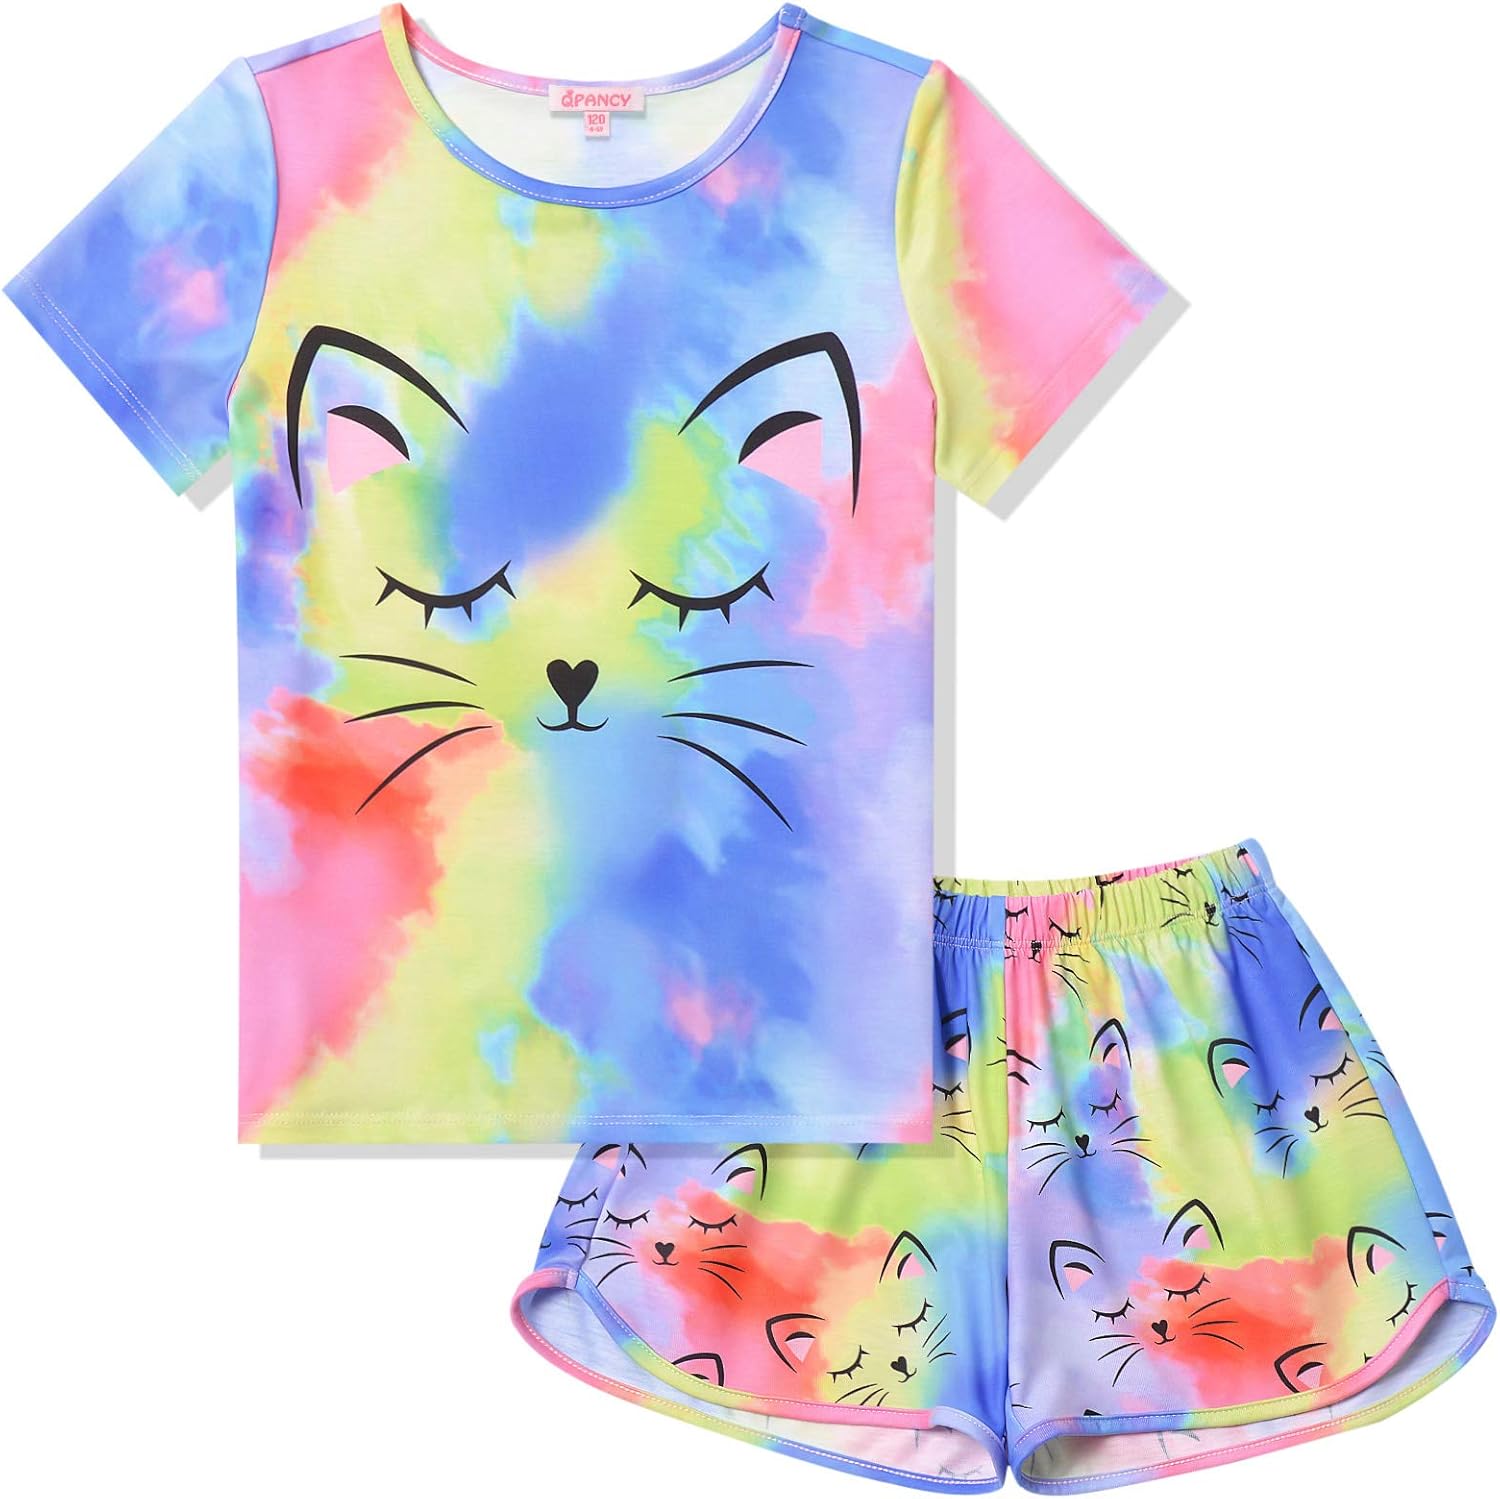 QPANCY Pajamas for Girls Unicorn Pjs Sets Little Kids Summer Short Sleeve Sleepwear